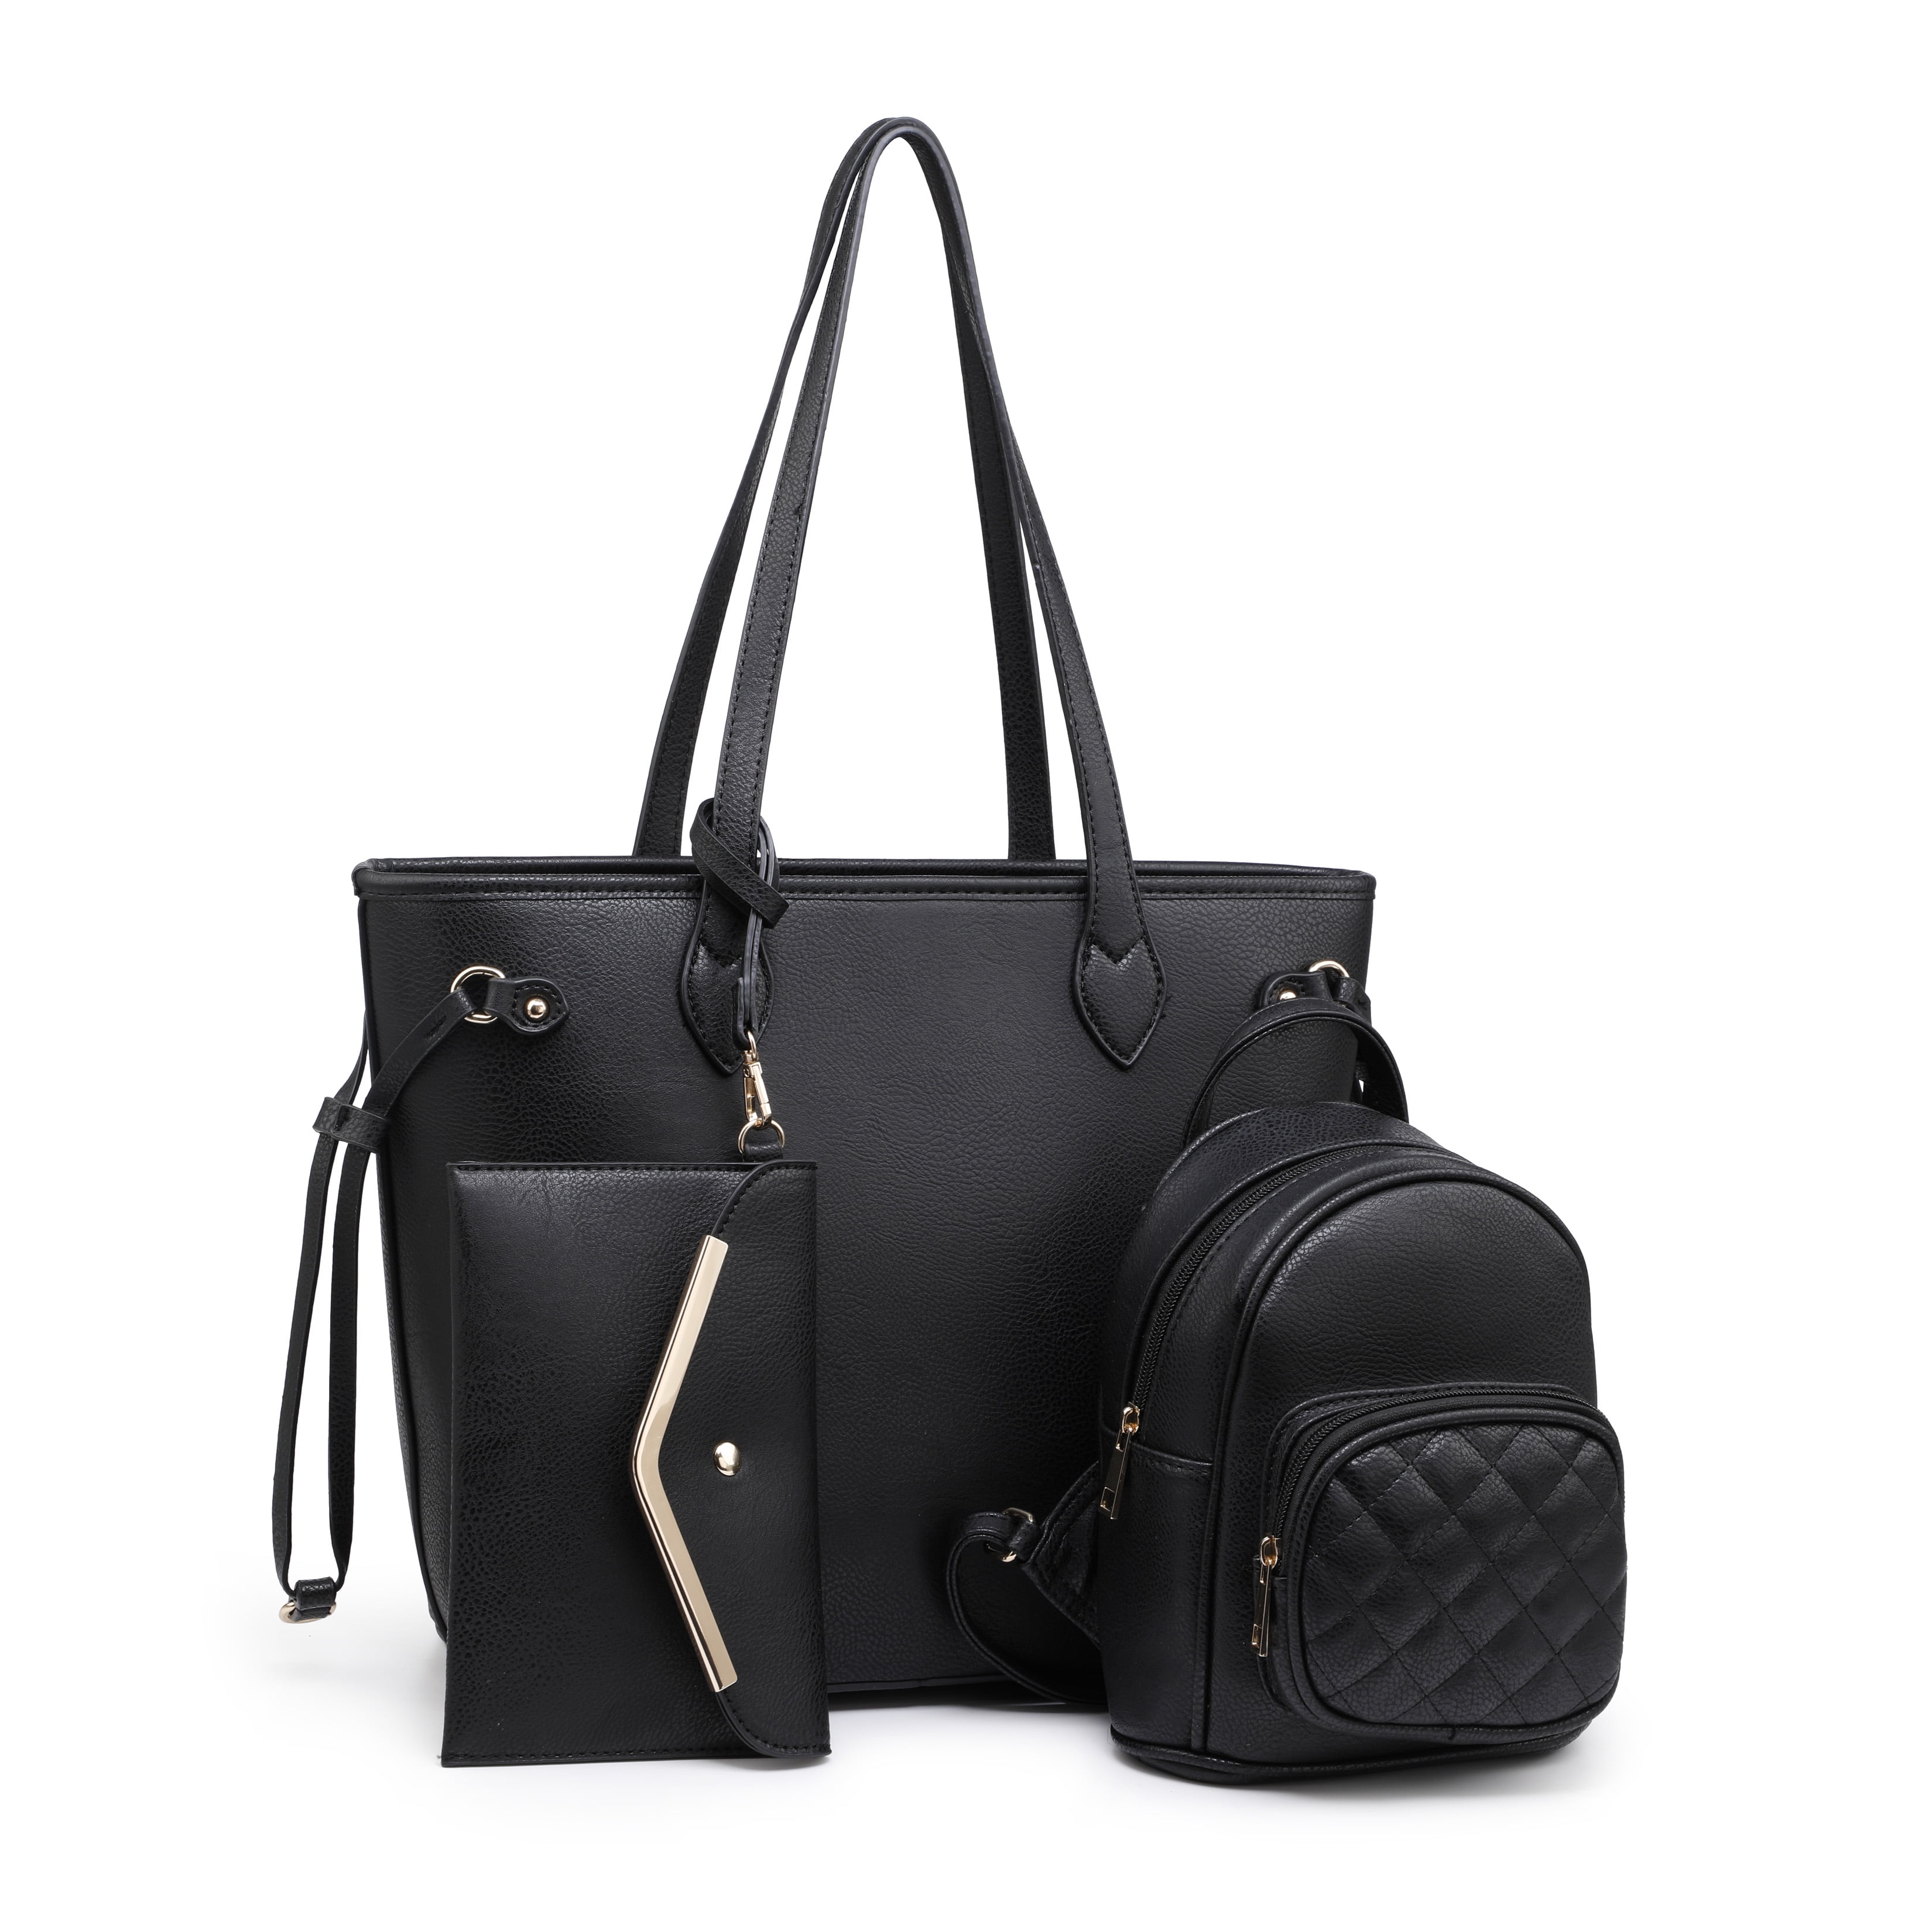 Poppy 3 Piece Leather Women Solid Shoulder Bag with Wallets Backpack Handbags Purses 67387491 037b 4f8a a26a 1c24d0569d03.8316f9eabc8fc1843c16394bc8eedaa9